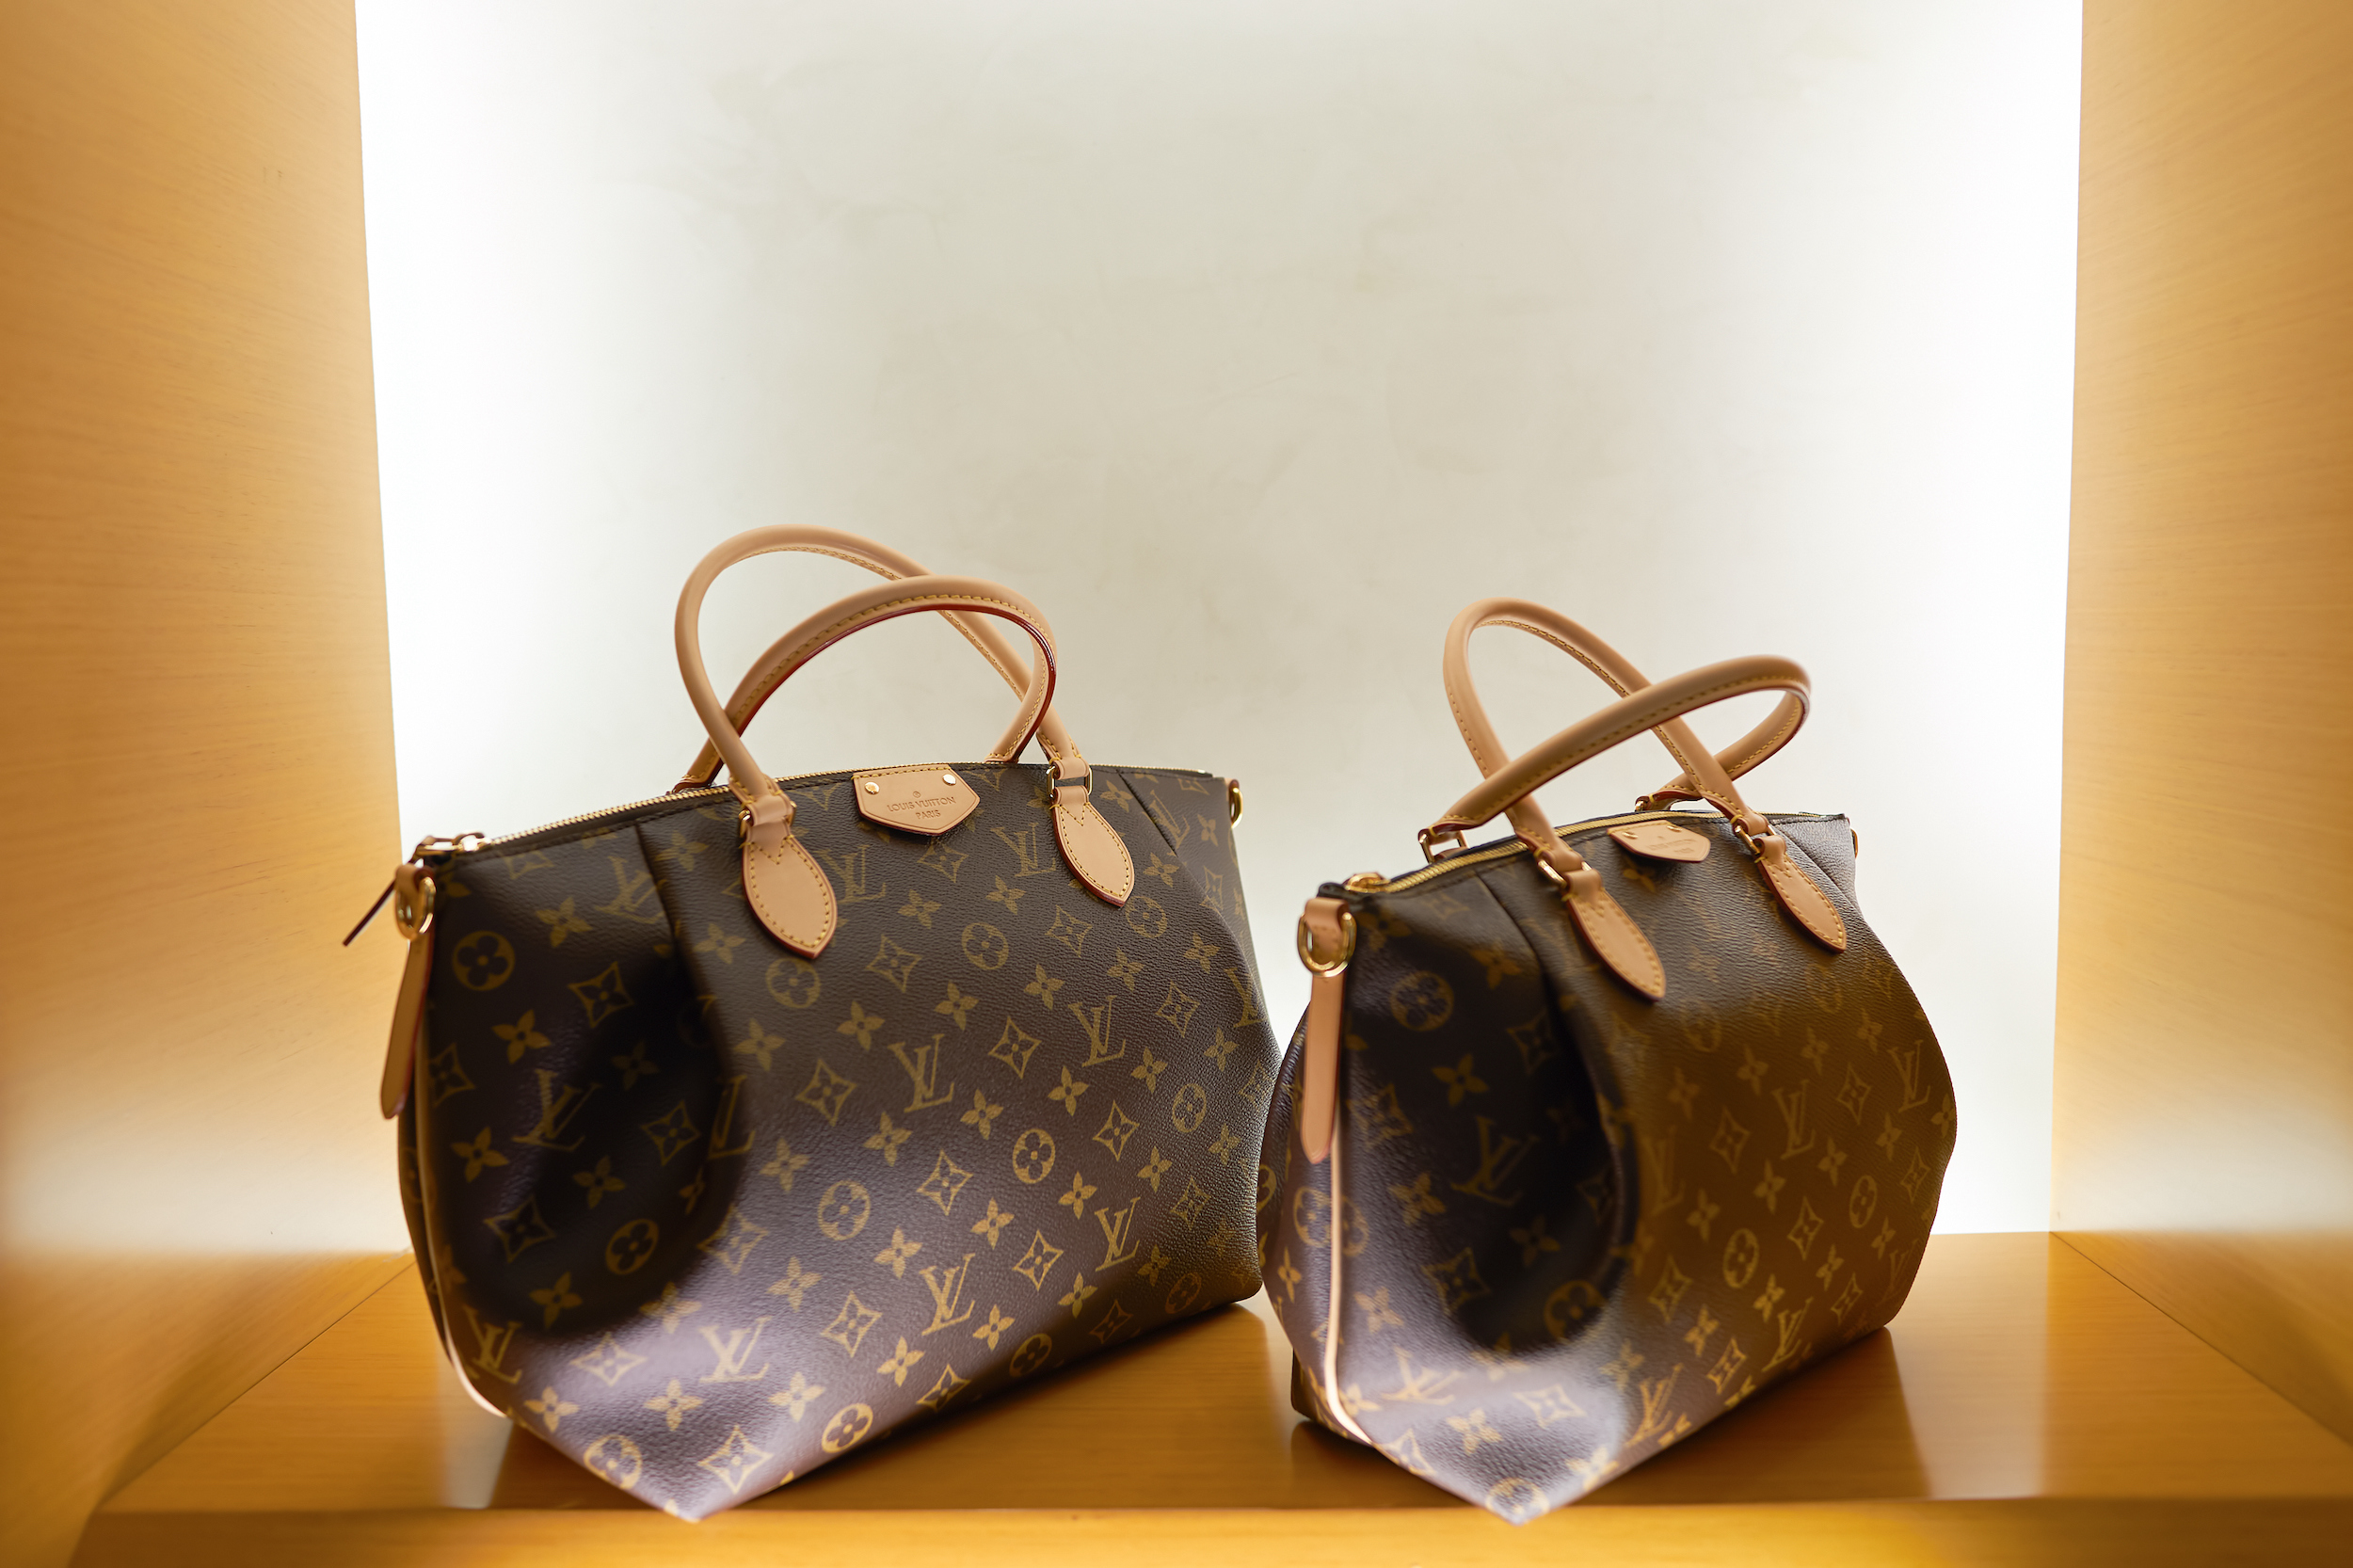 How to Clean Louis Vuitton Canvas Bag - Handbagholic